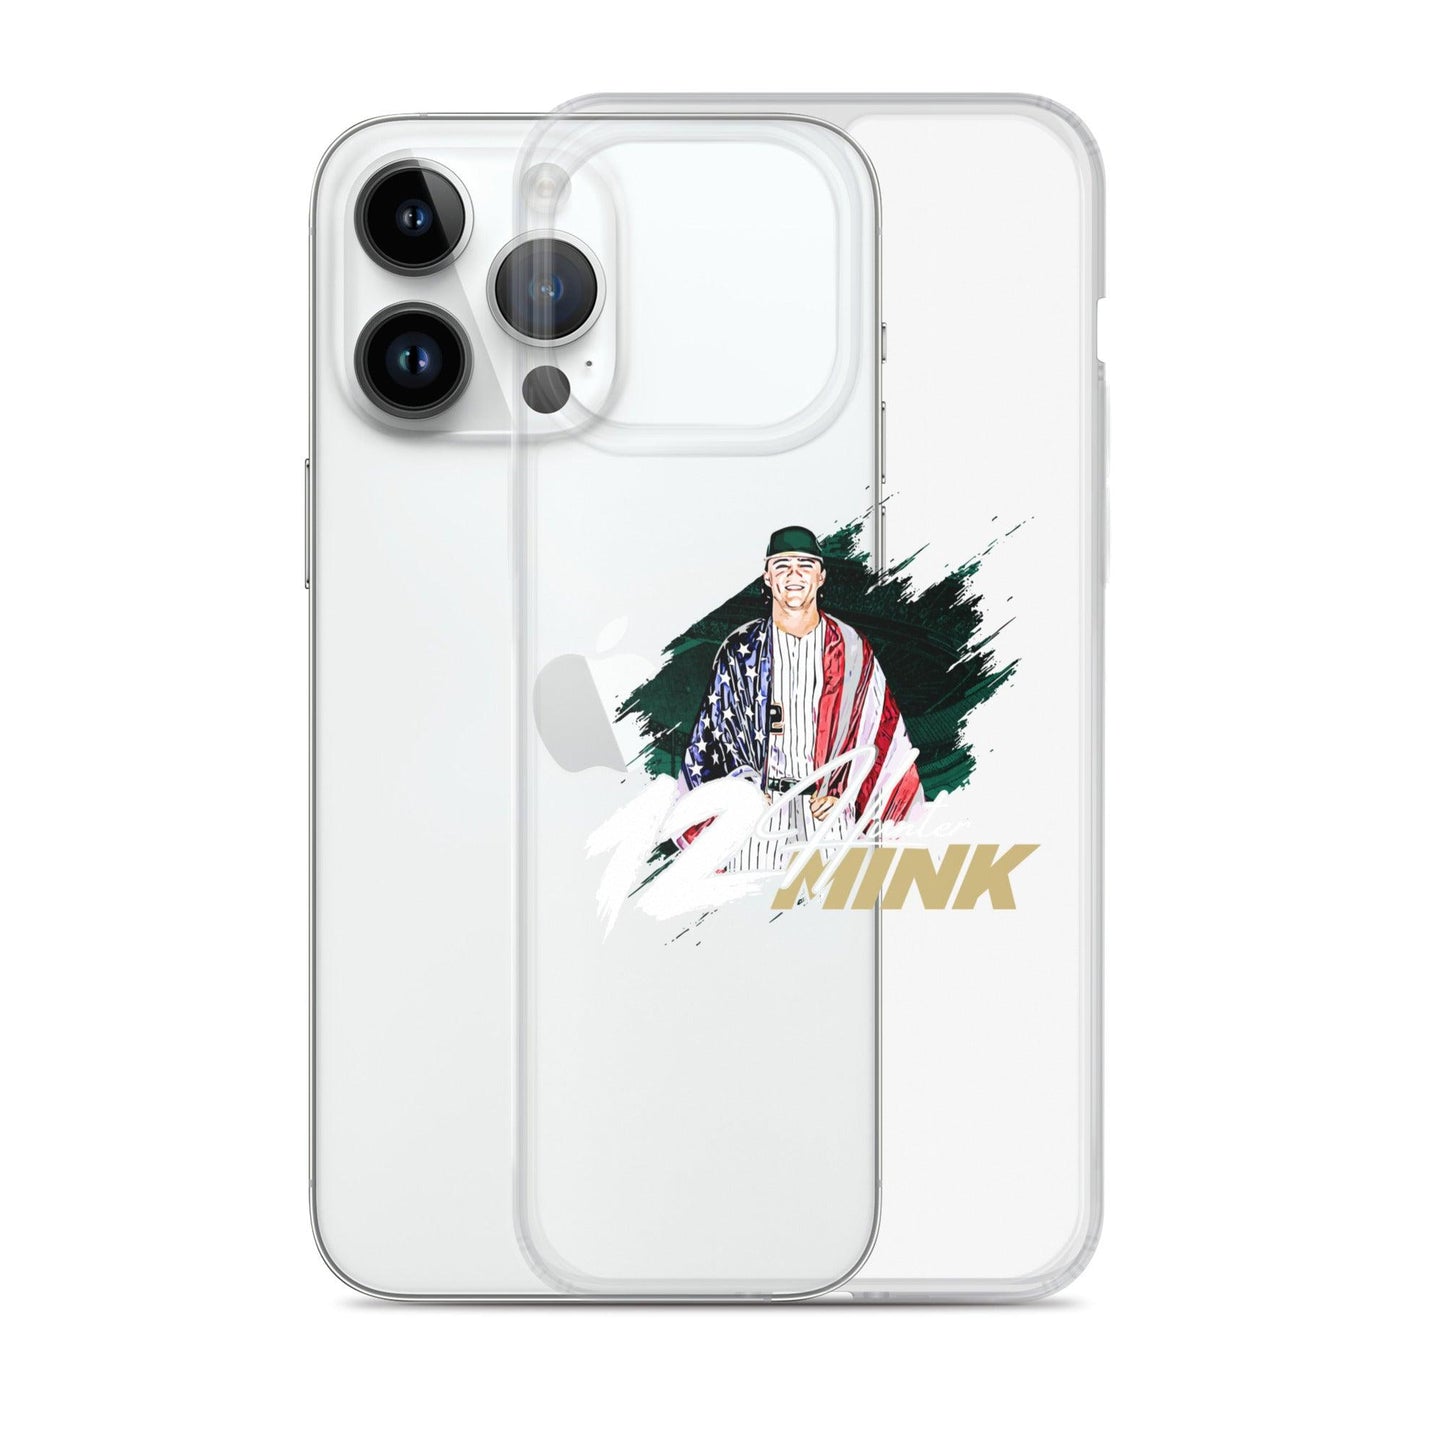 Hunter Mink "USA" iPhone Case - Fan Arch